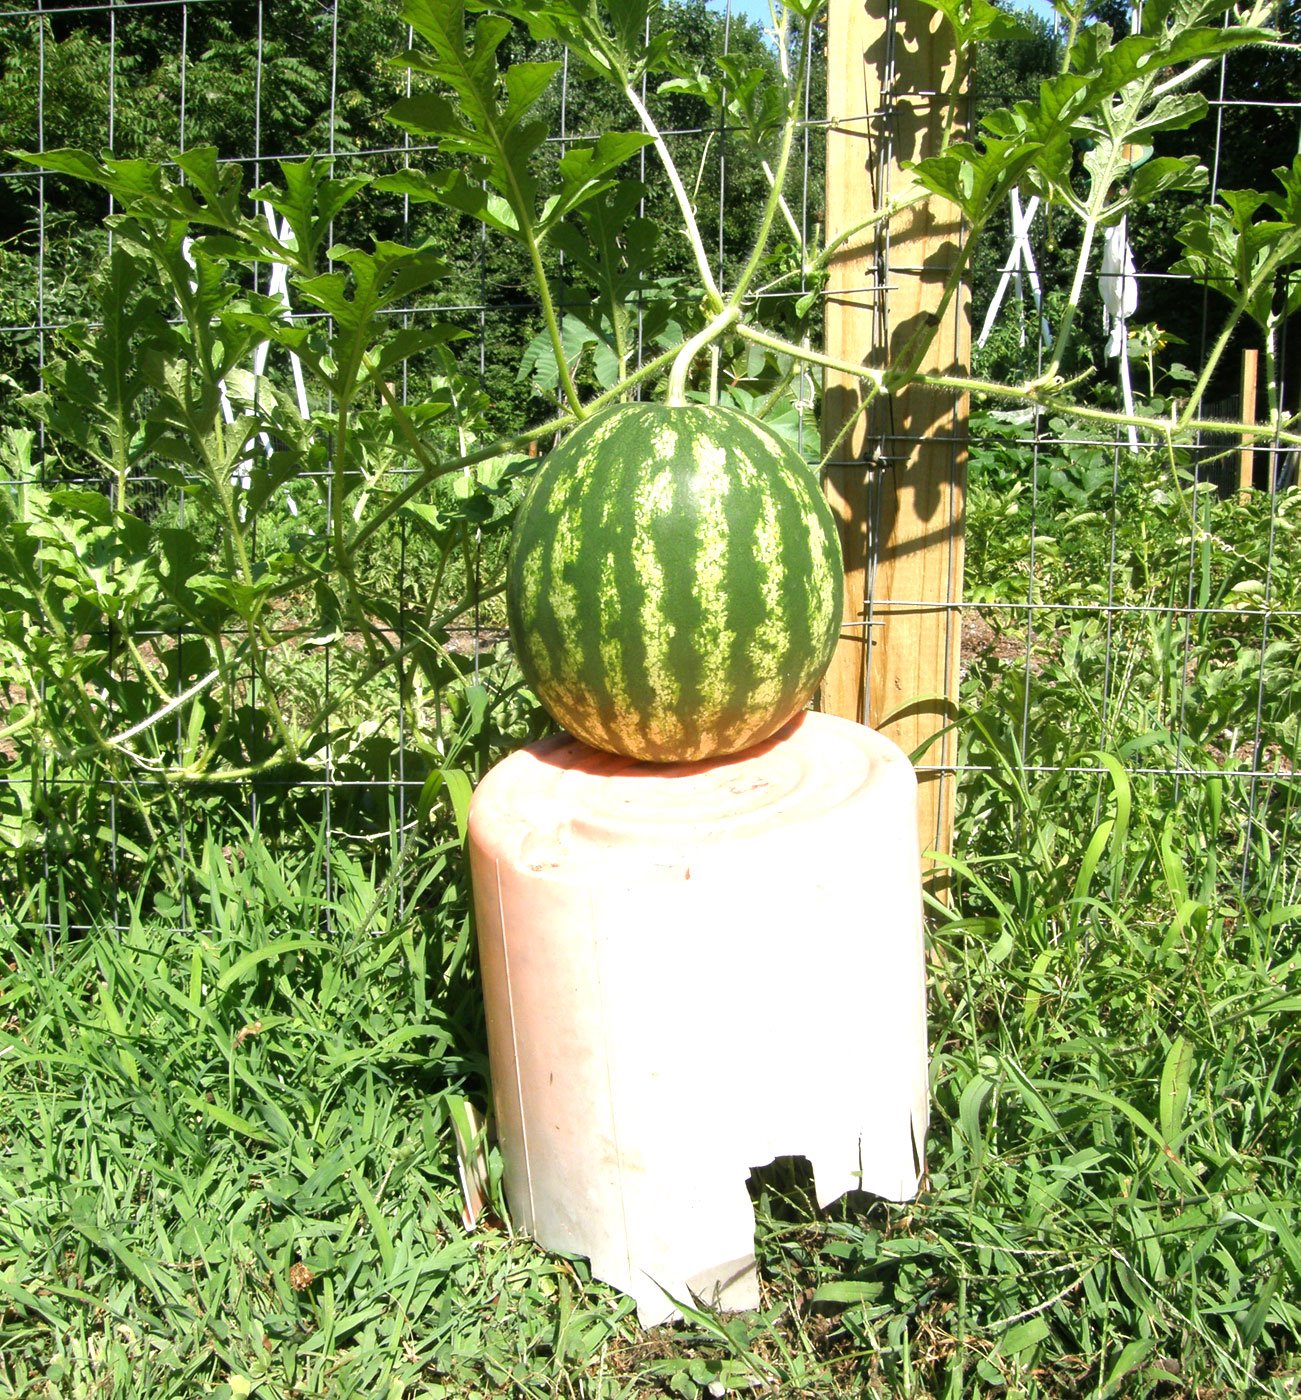 [watermelon-bucket.jpg]